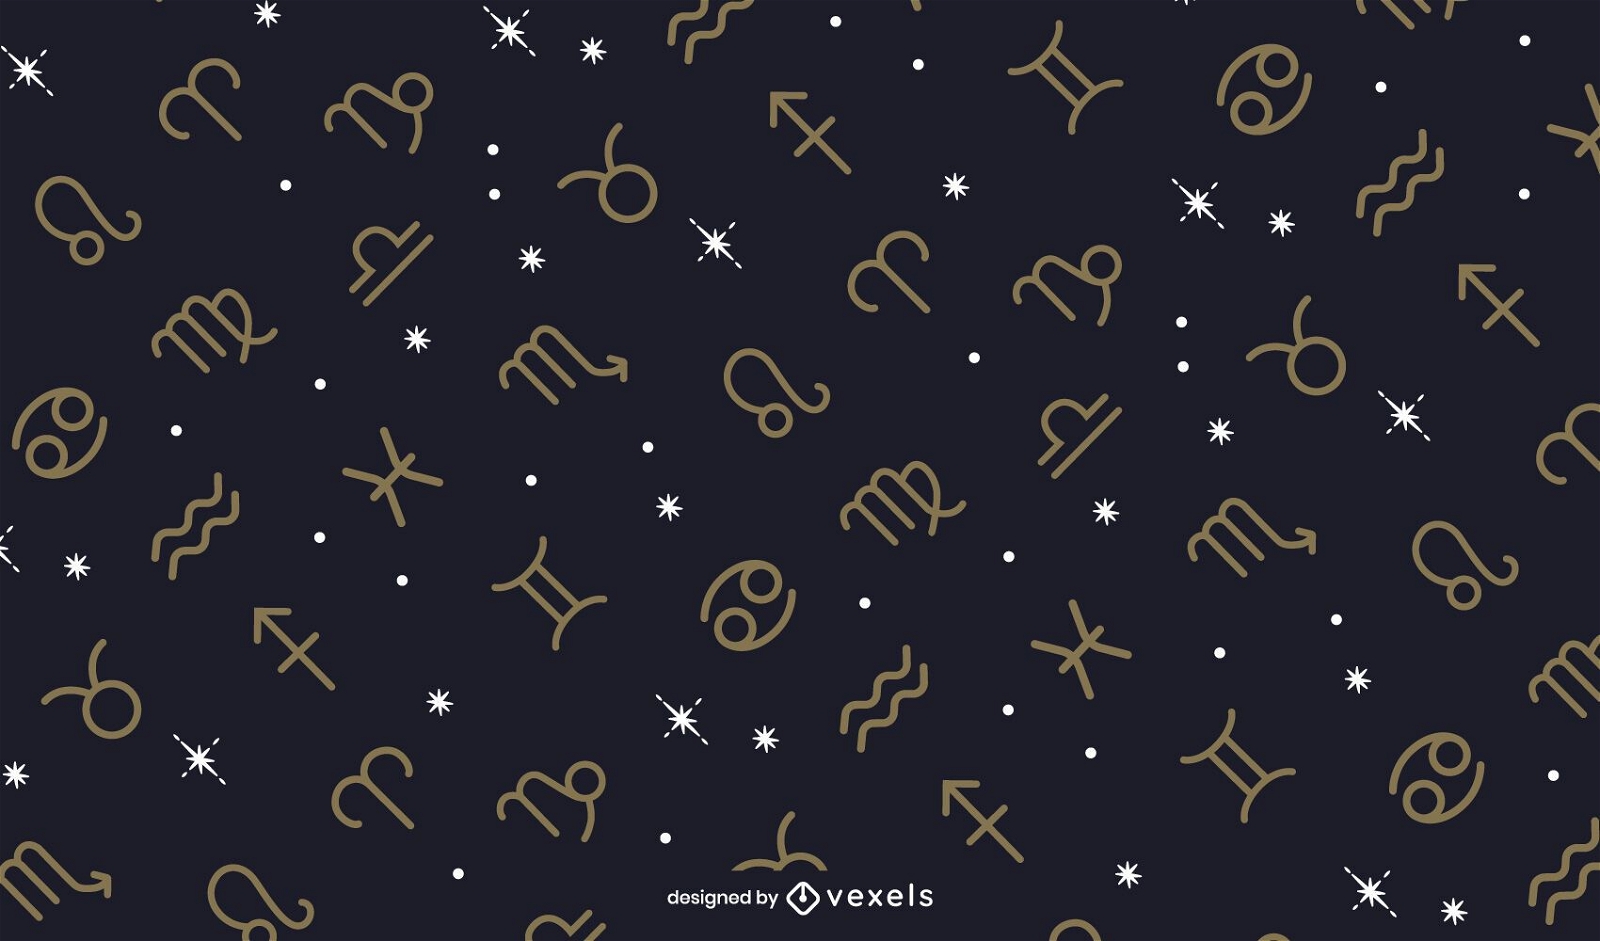 Zodiac signs pattern design